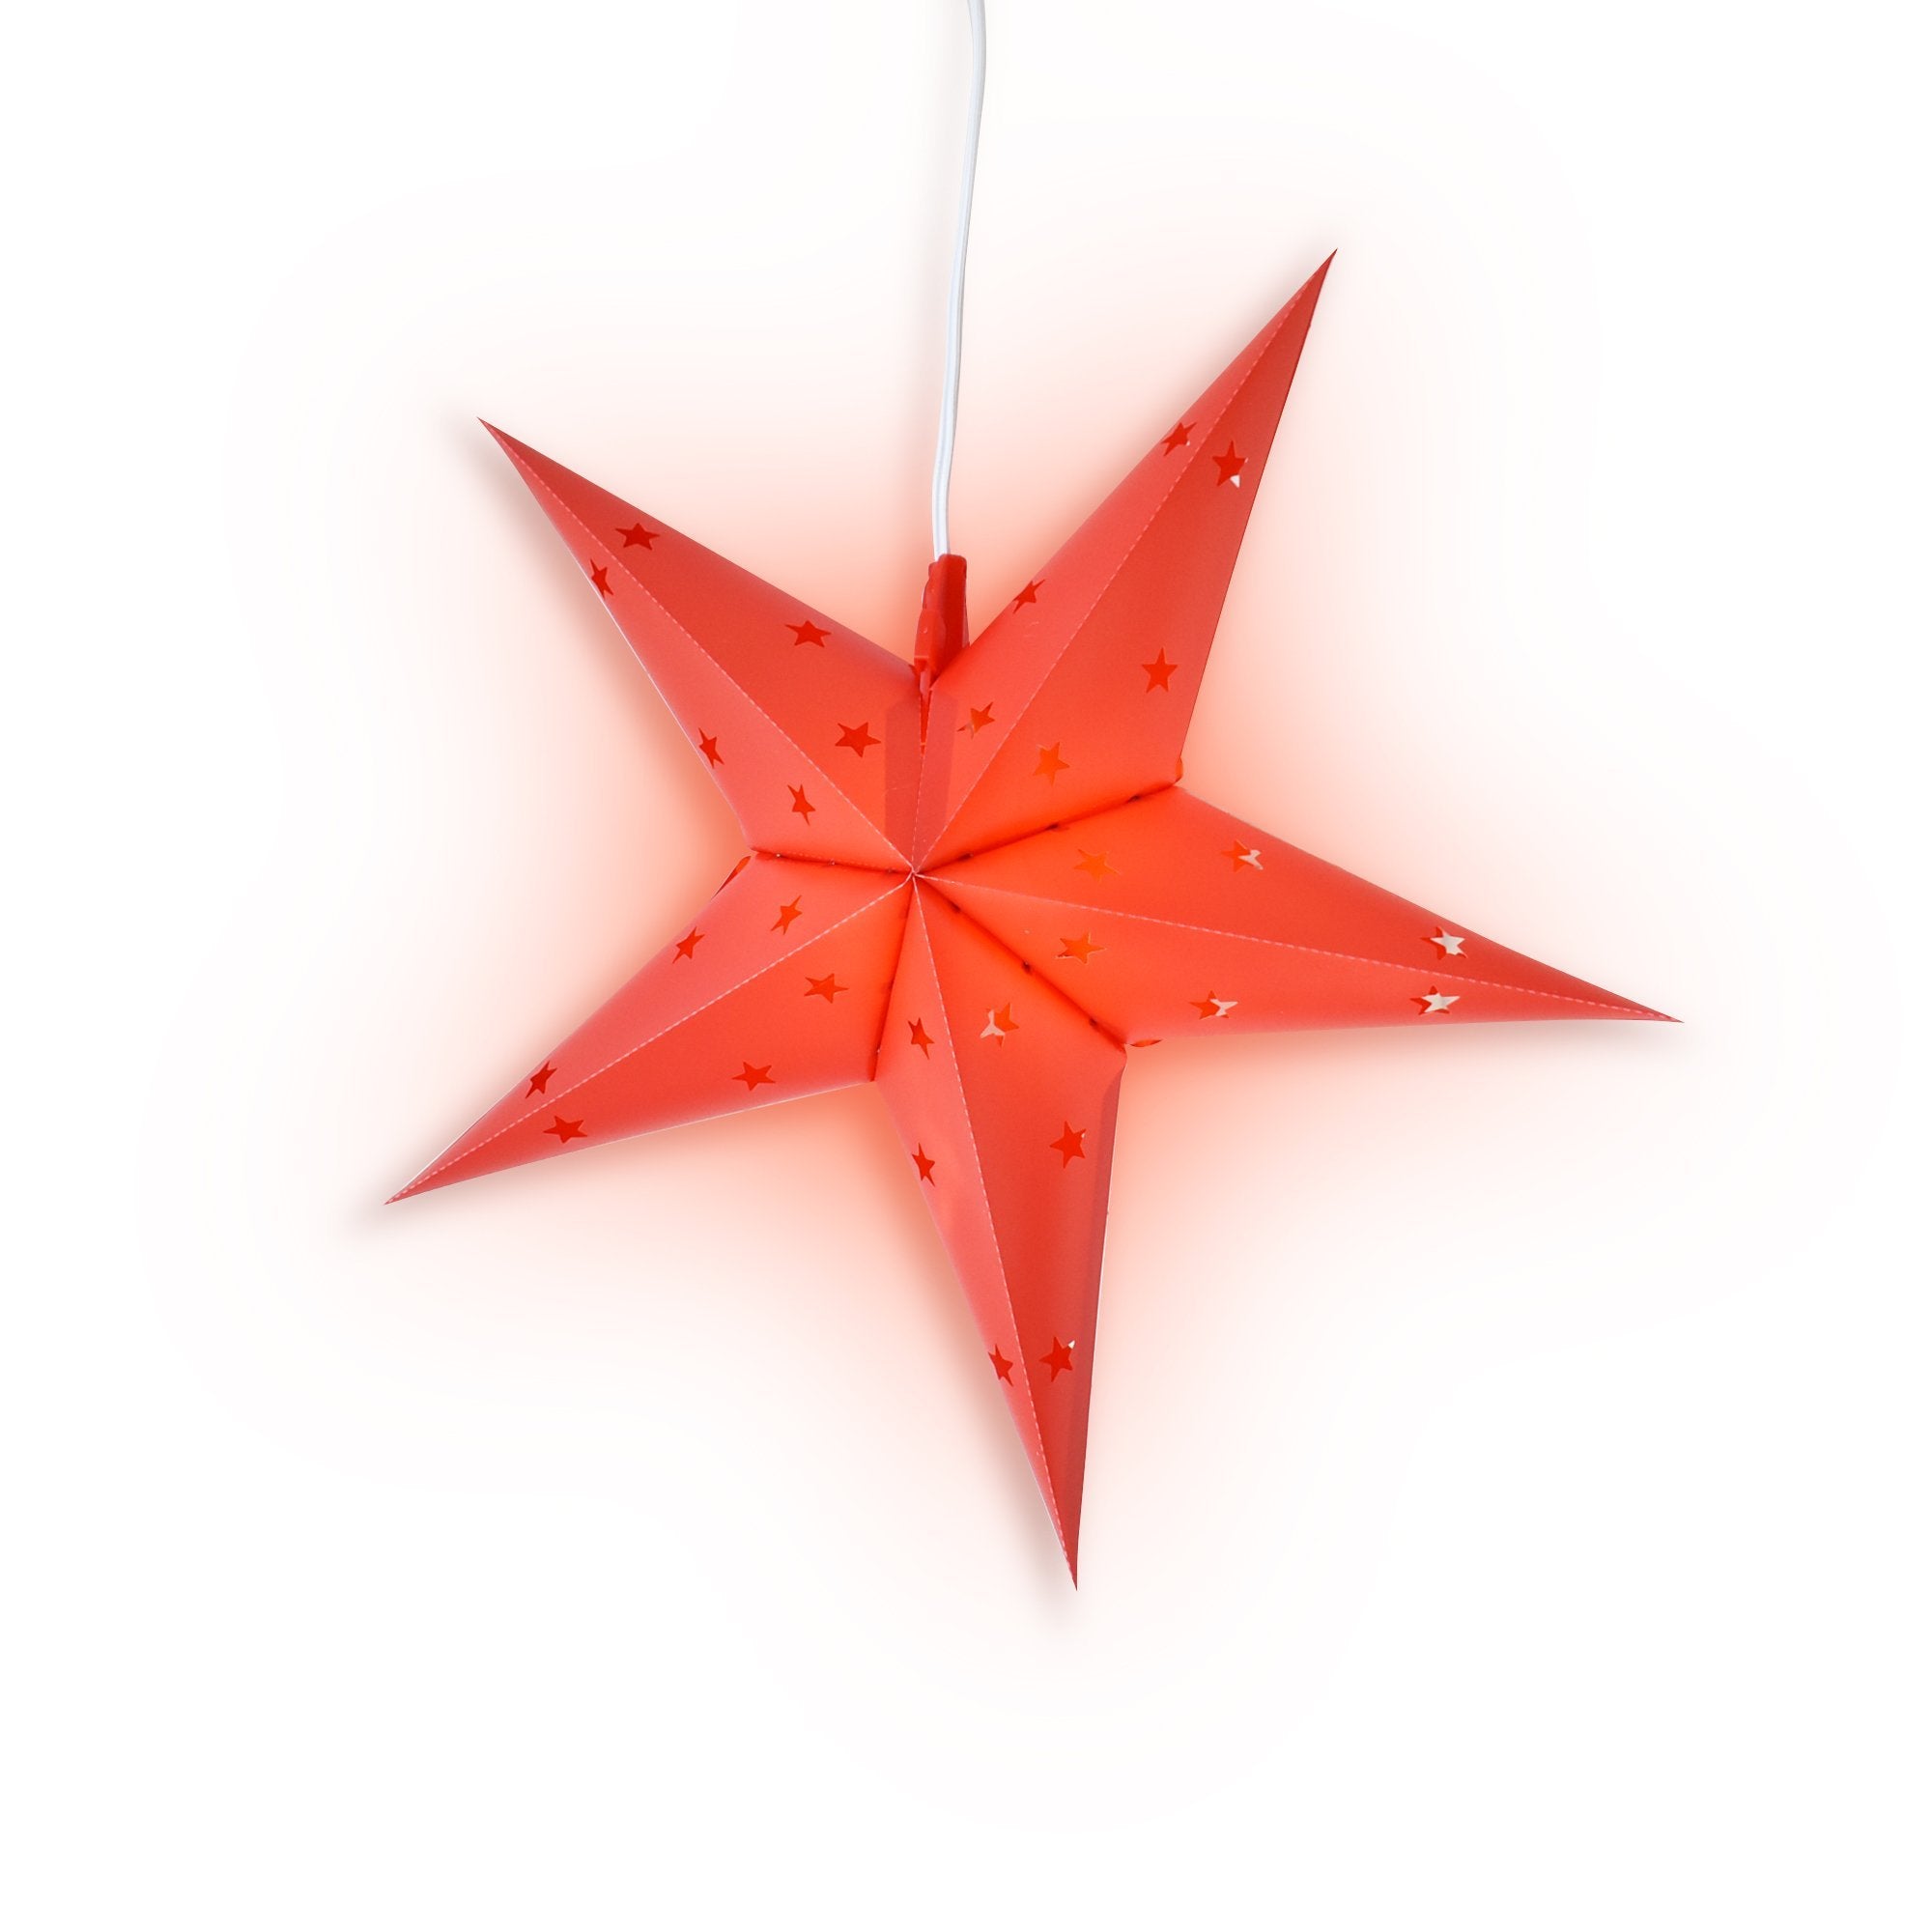 19" Red Weatherproof Star Lantern Lamp, Hanging Decoration (Shade Only)